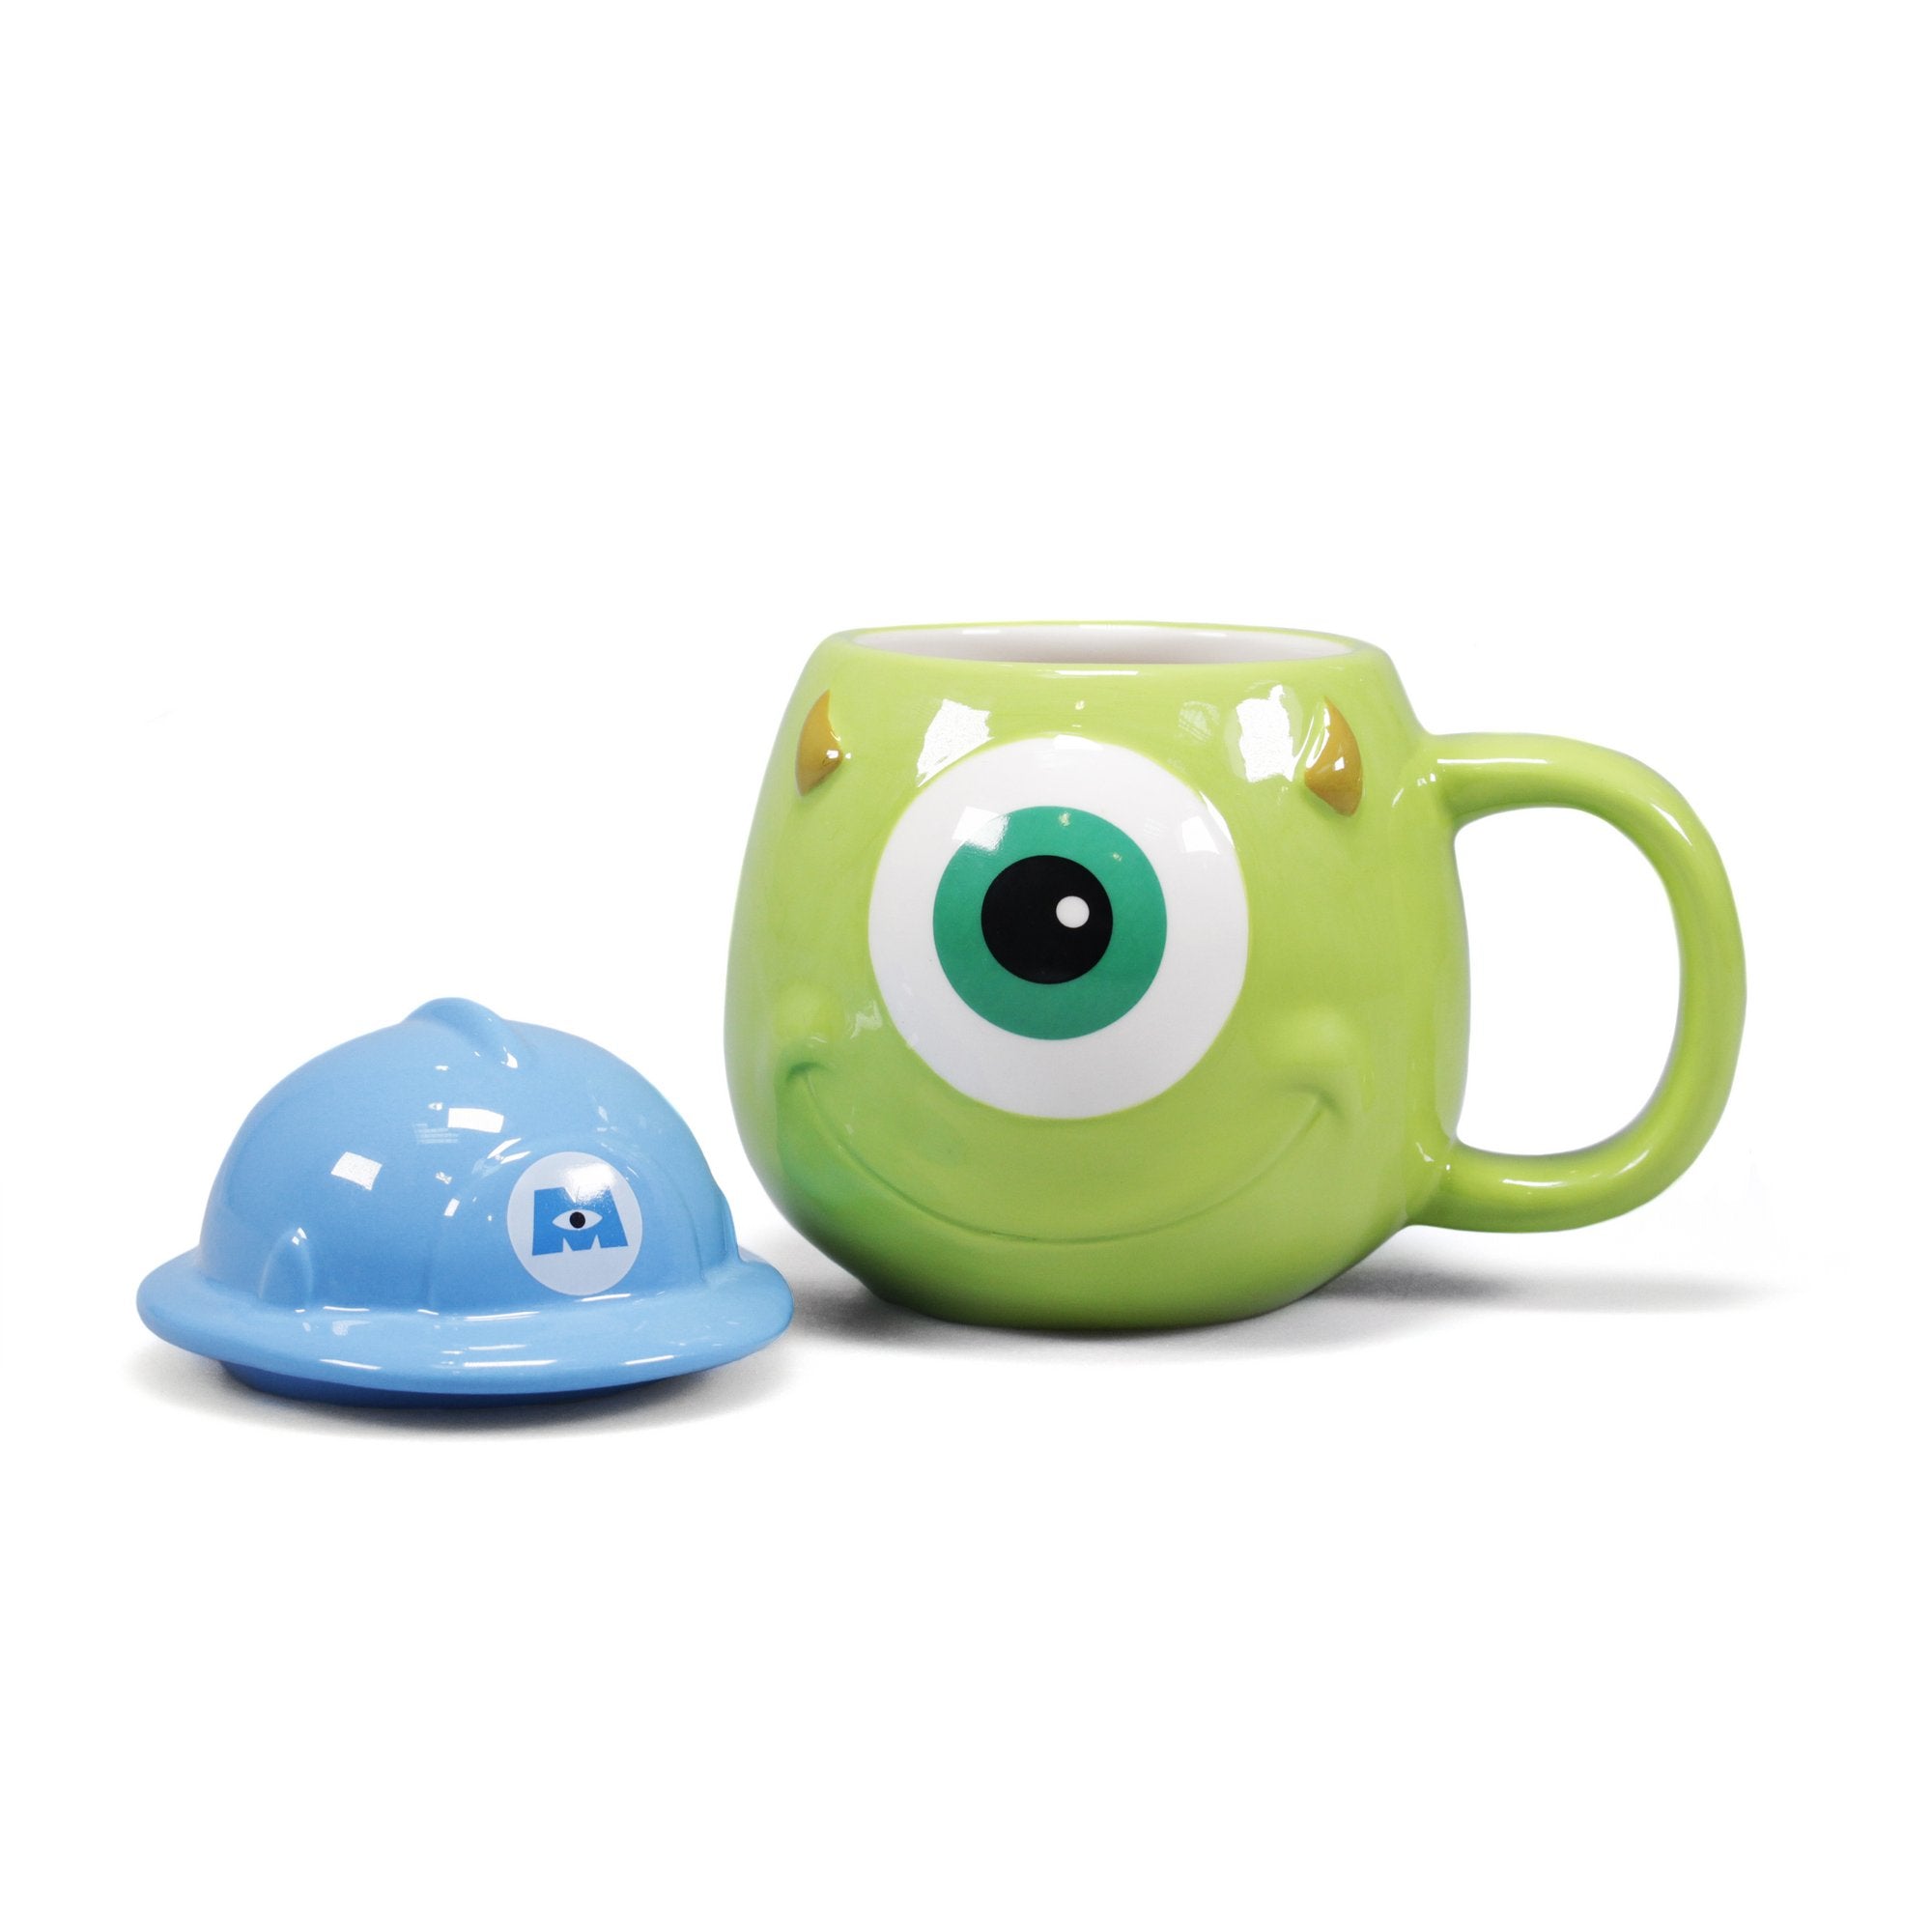 Monsters Inc Shaped Mug - Pixar (Monsters Inc Mike)